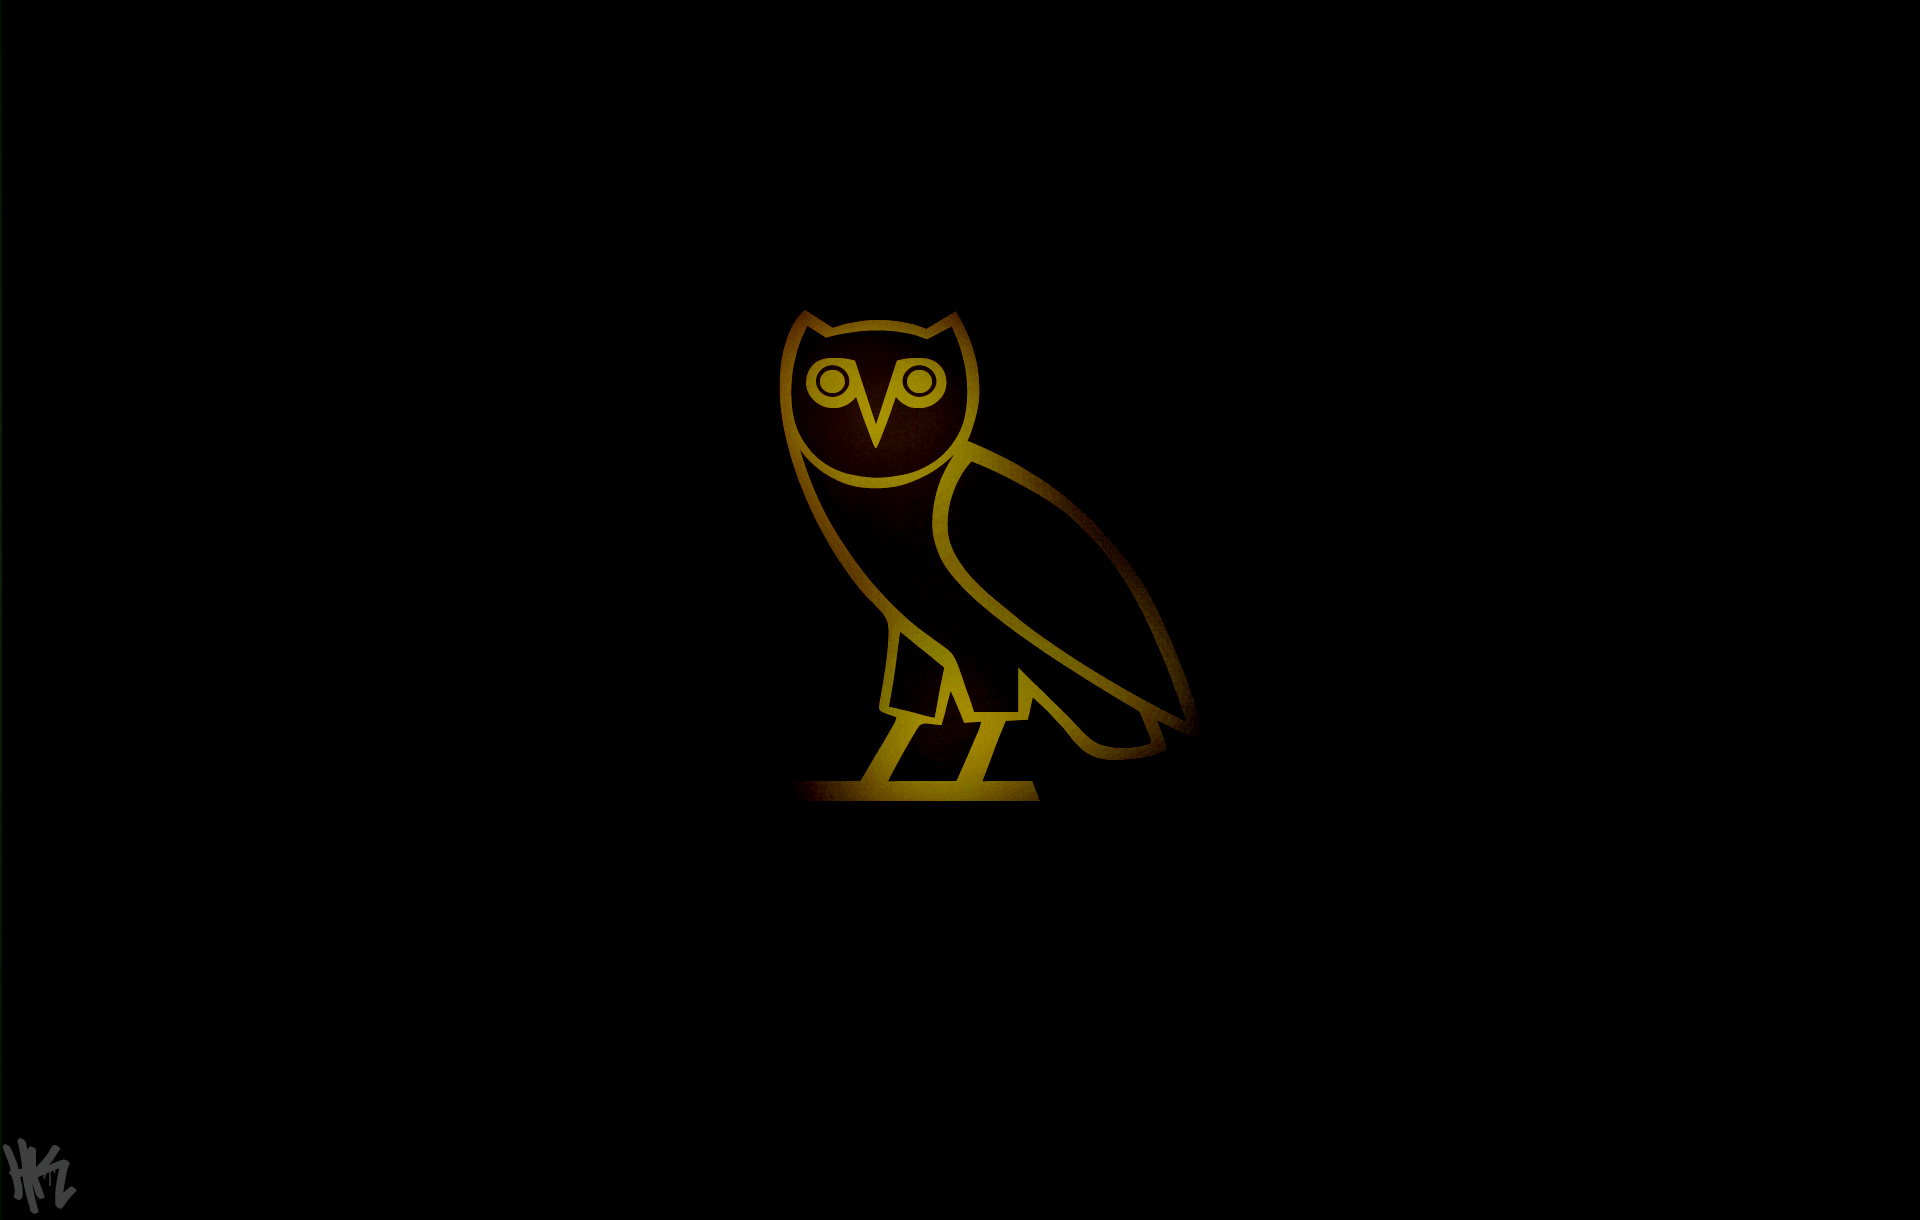 OVO Owl Wallpaper - WallpaperSafari